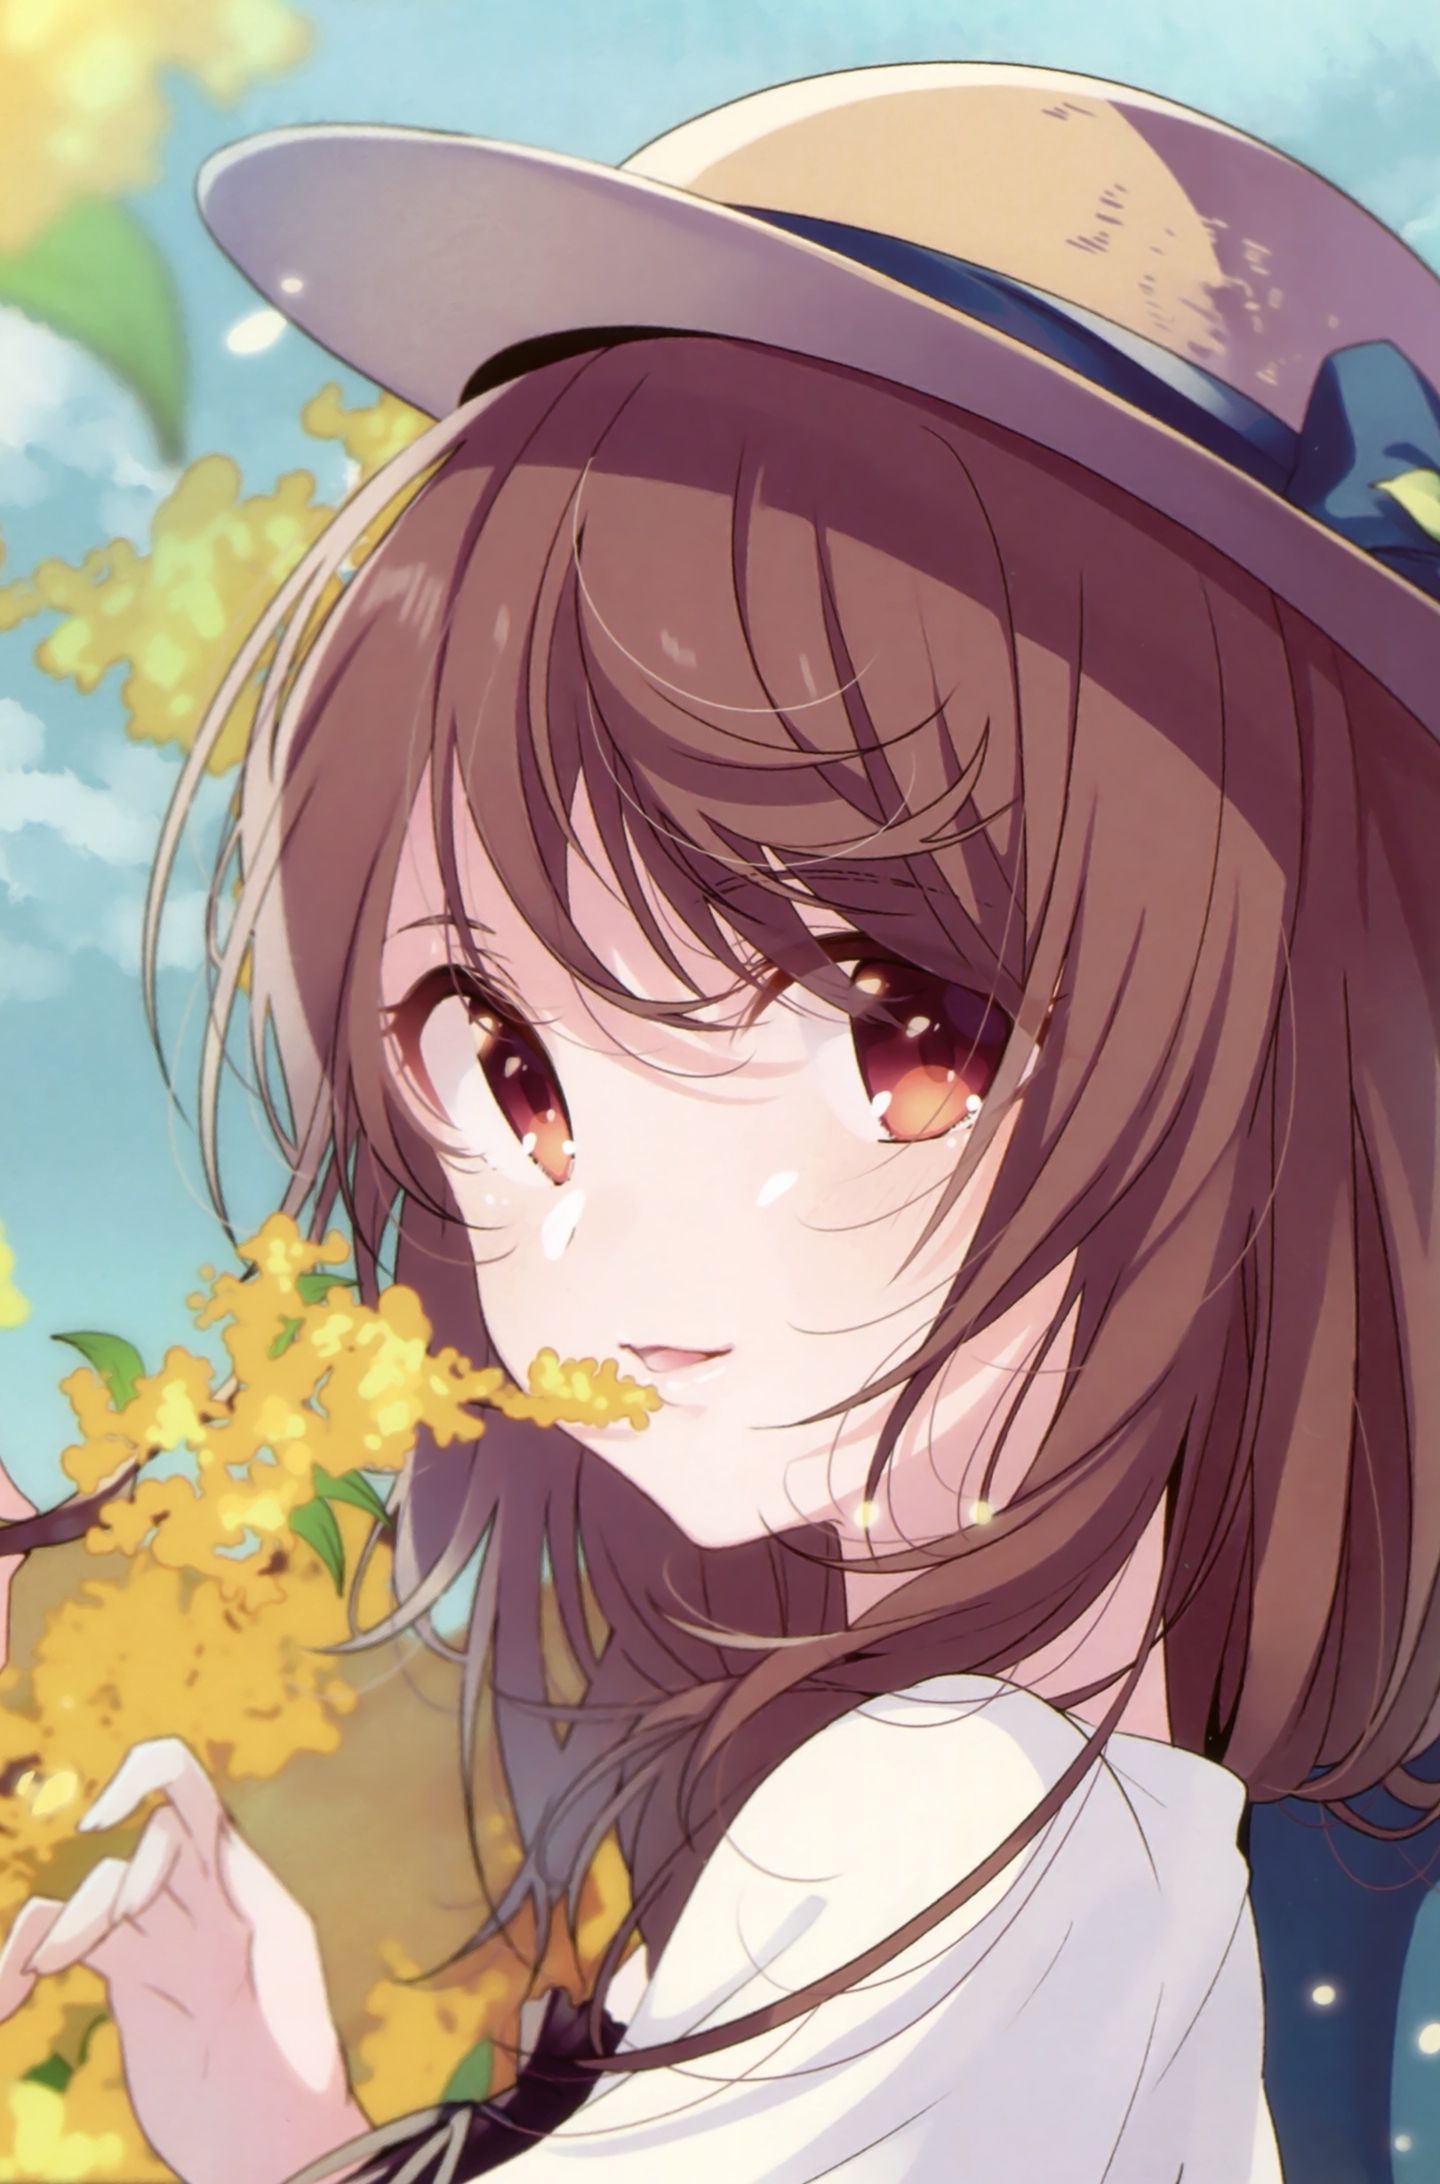 Download 1440x2880 wallpaper autumn, tree branch, anime girl, cute, lg v lg g 1440x2880 HD image, background, 3872